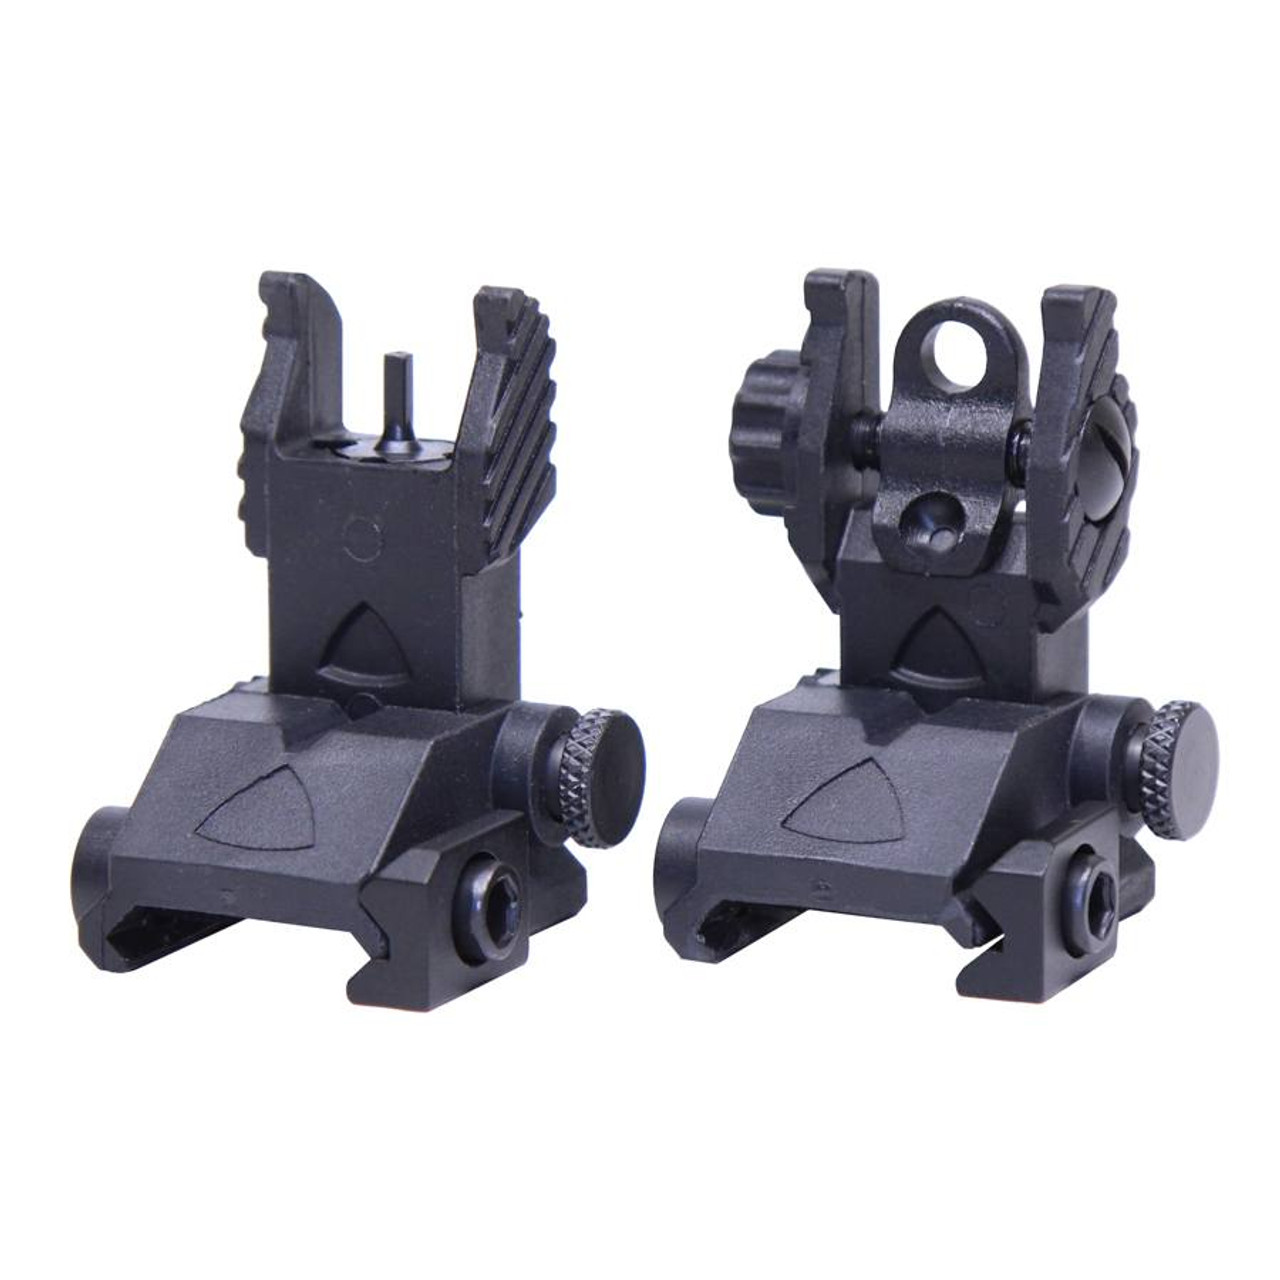 Guntec USA EZ-SIGHTS AR-15 'Ez Sights' Thin Profile Polymer Back Up Iron Sight Set (Discontinued)